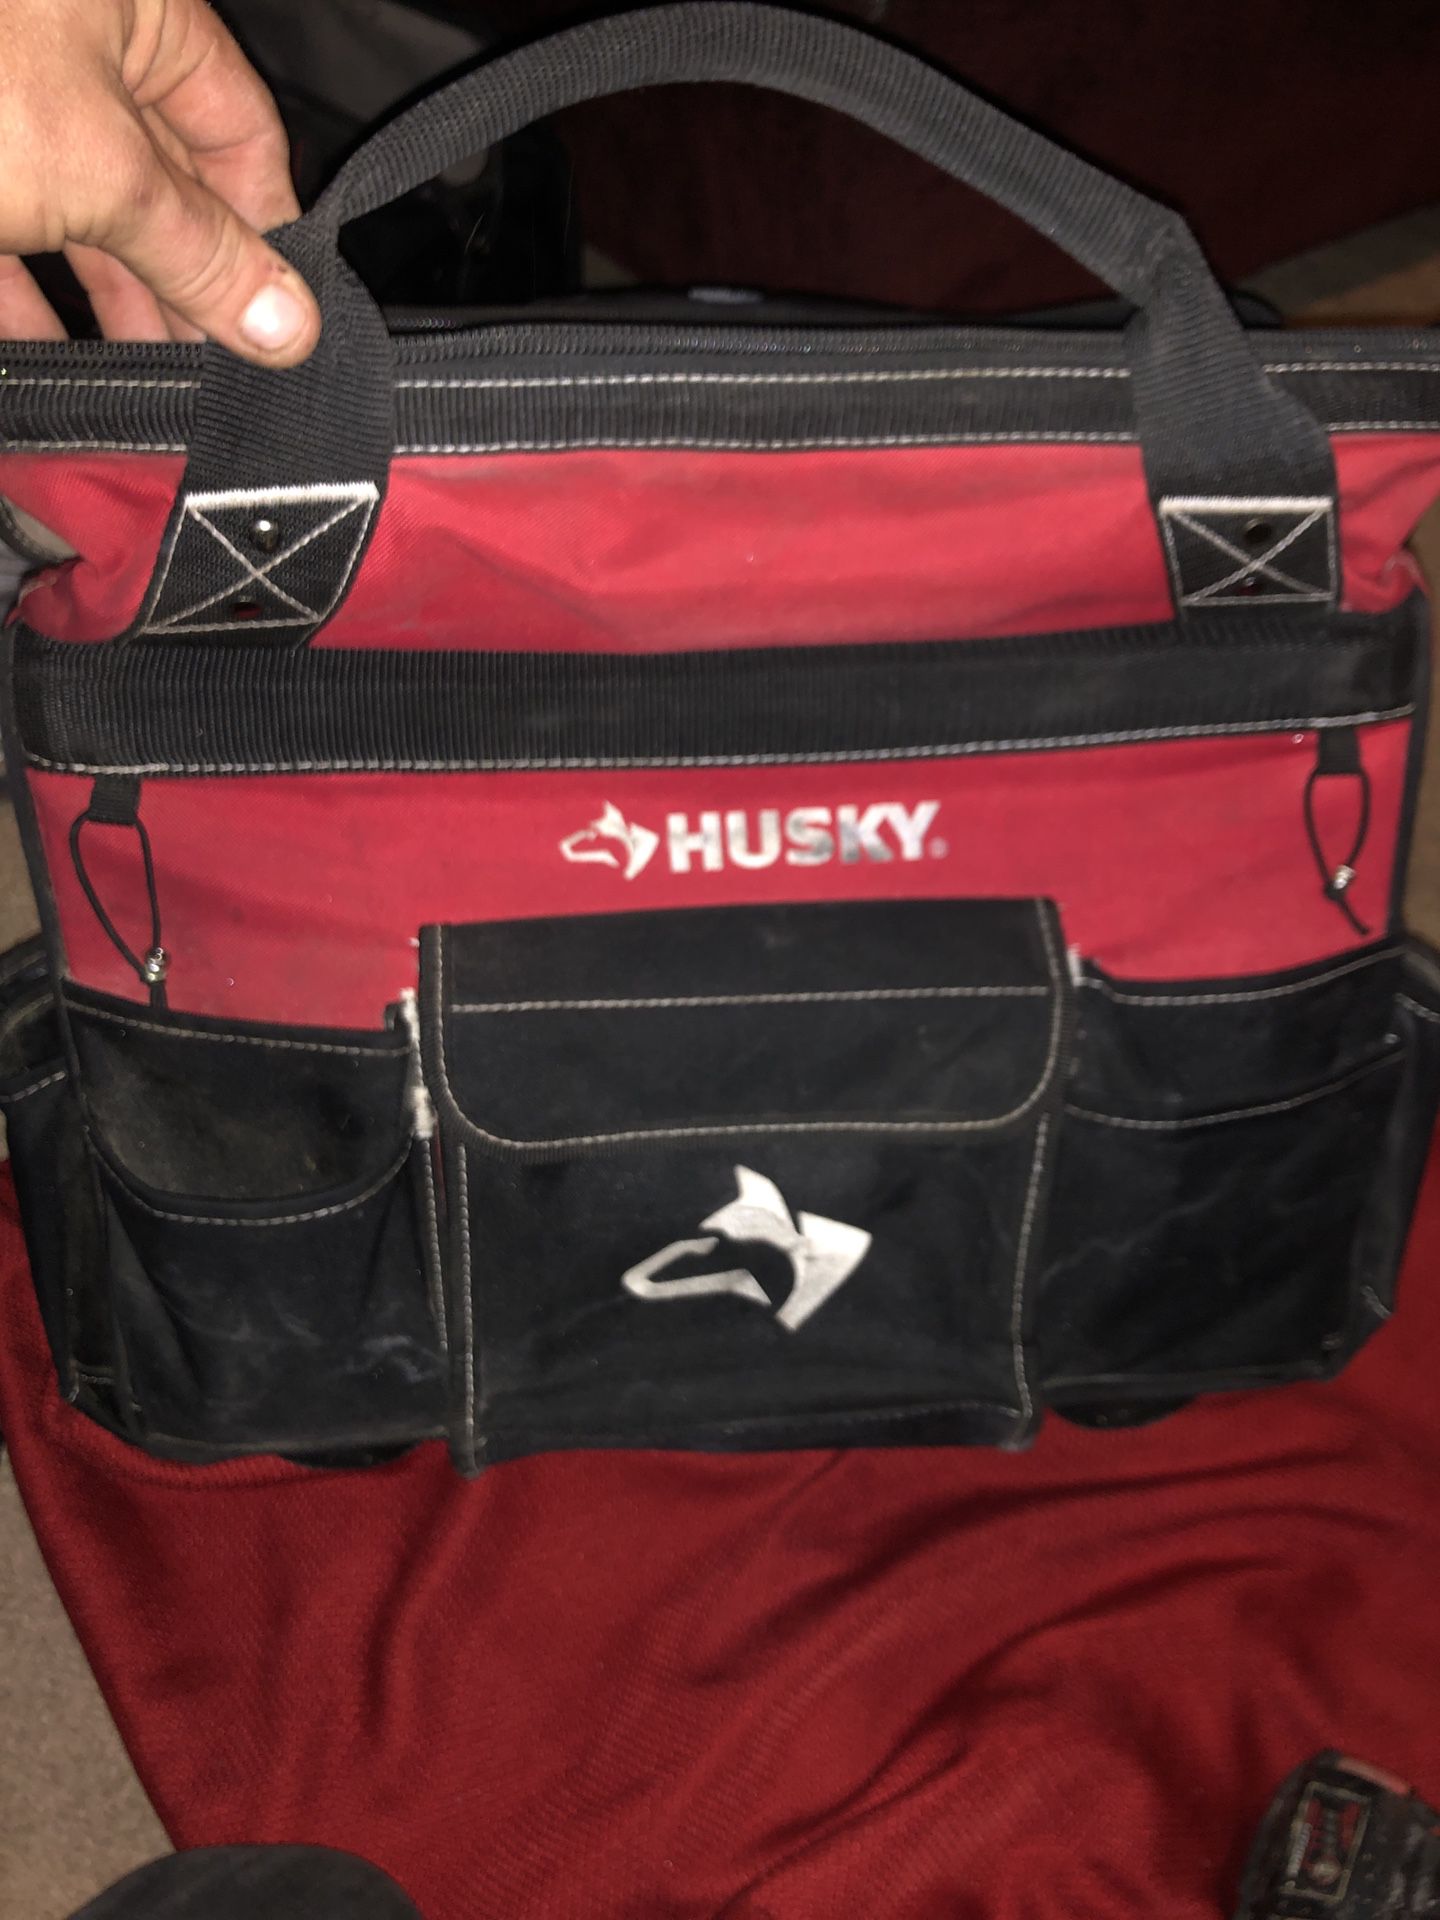 Husky tool bags